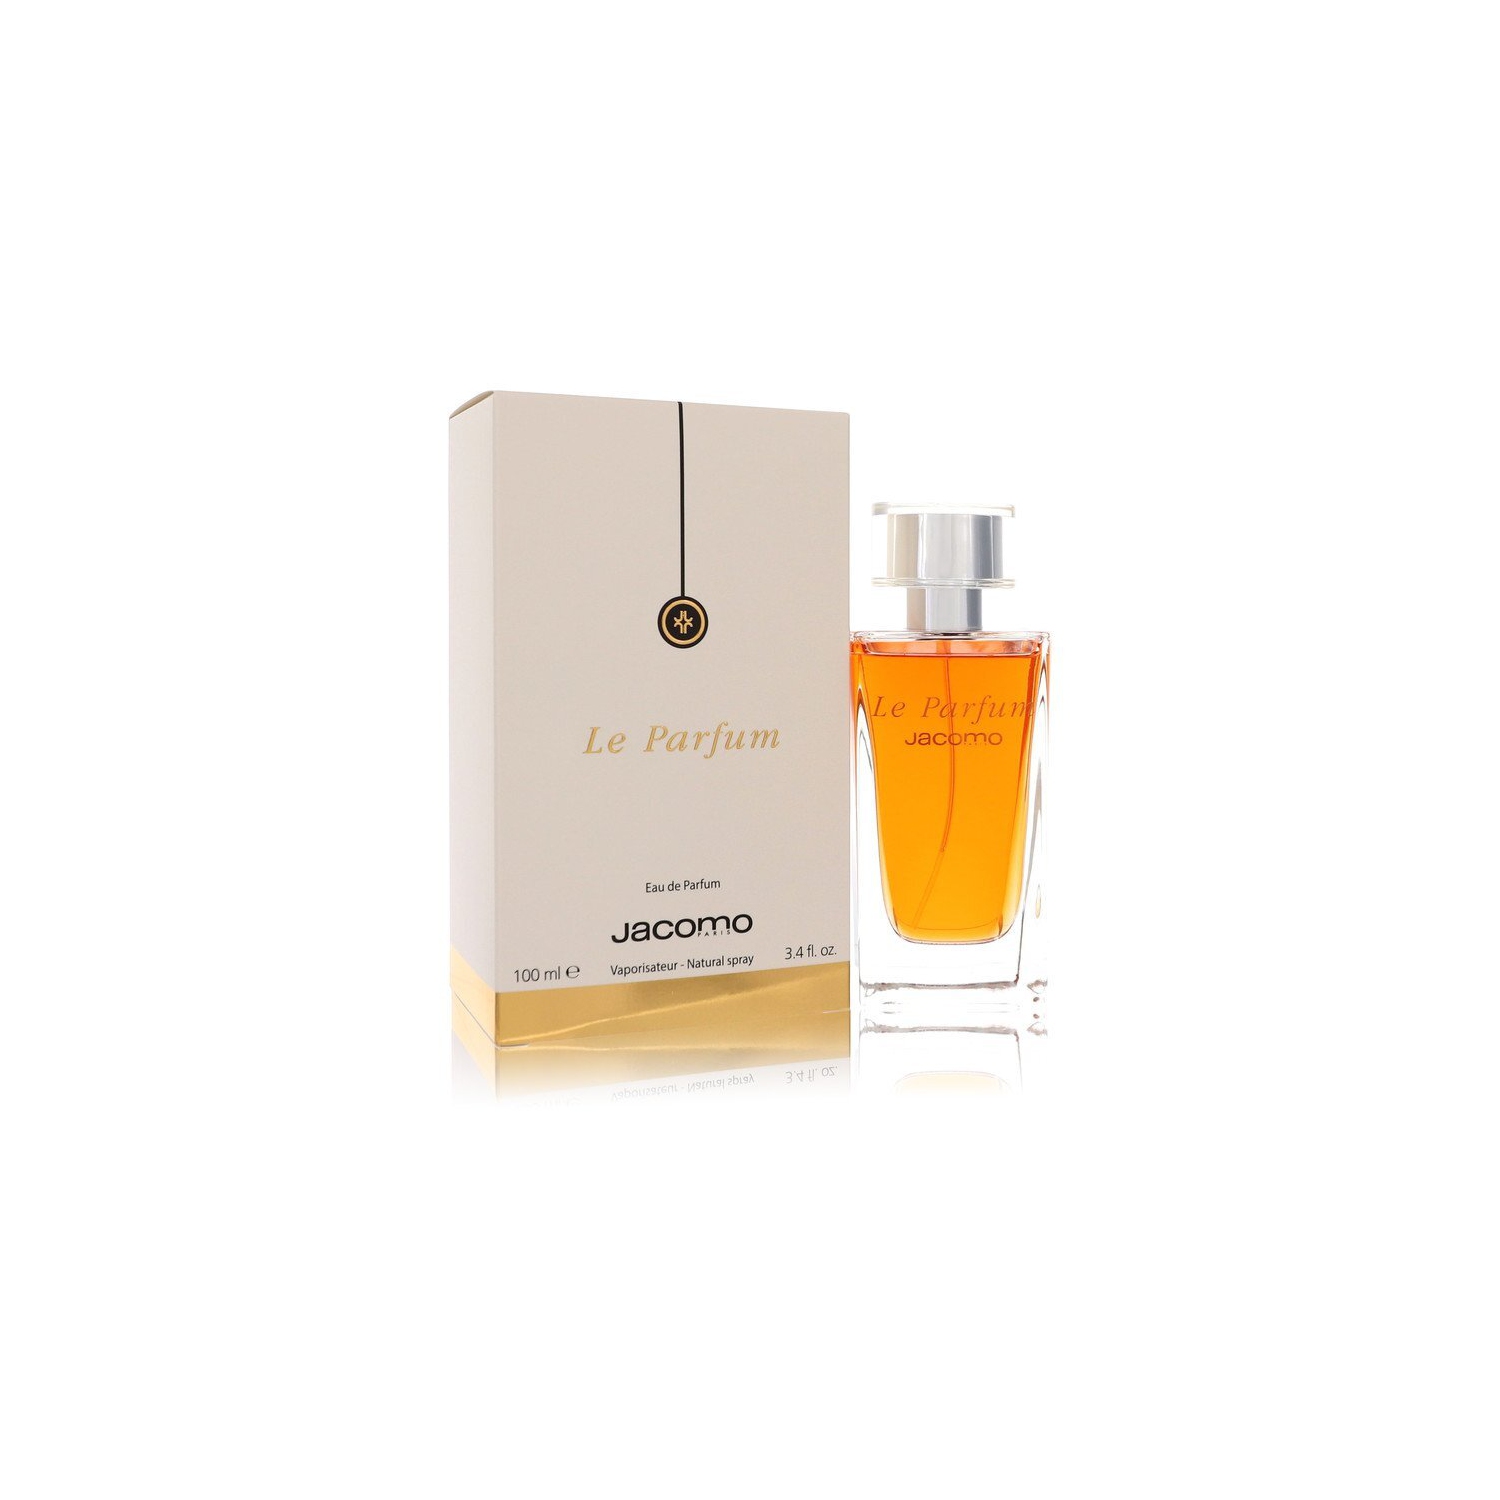 Le Parfum by Jacomo for Women - 3.4 oz EDP Spray | Best Buy Canada